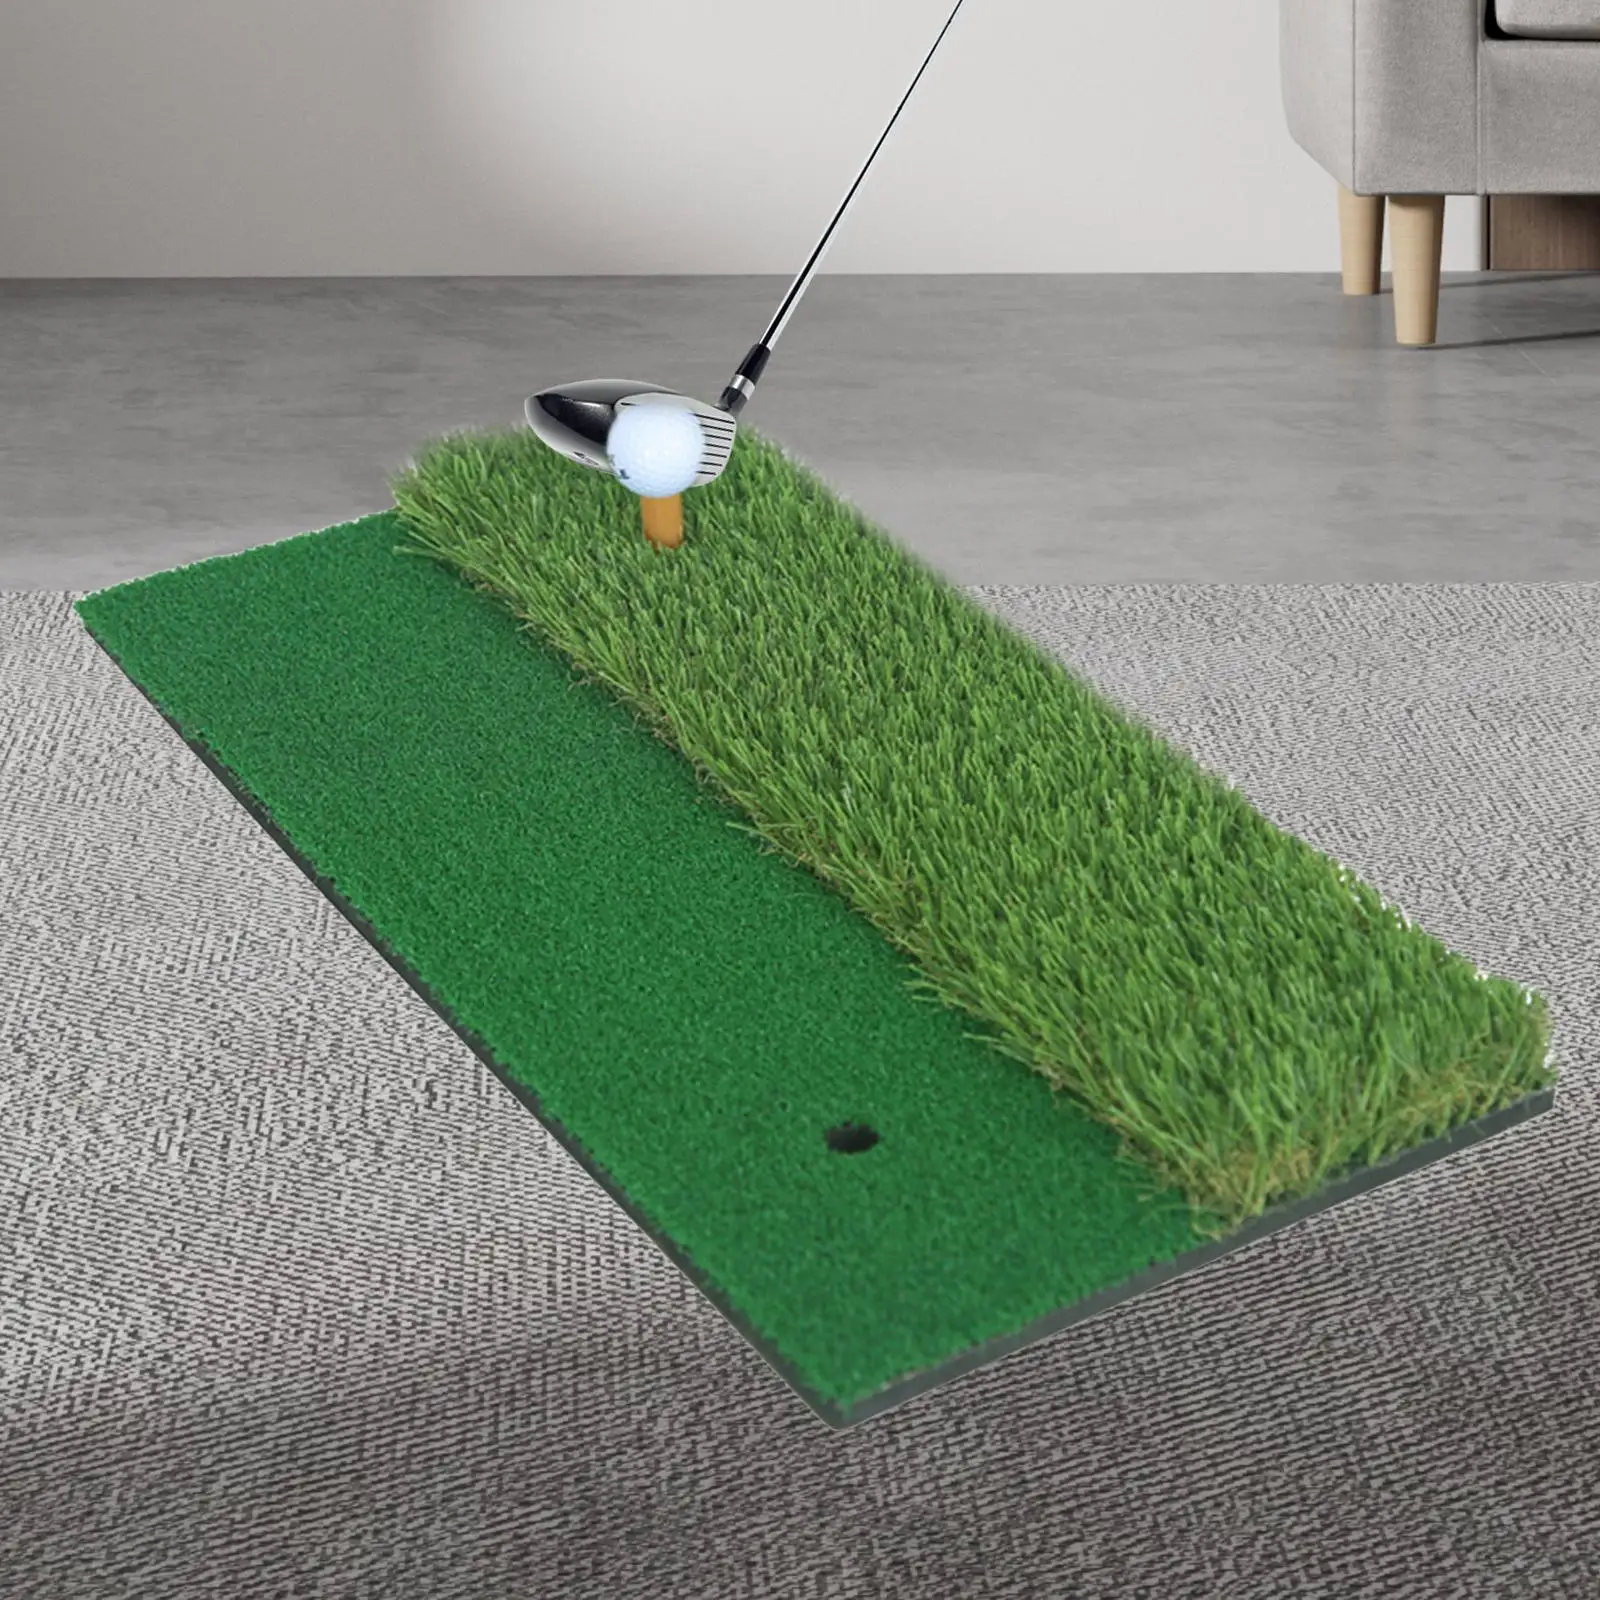 Golf Hitting Mat 30x60cm Correct Hitting Posture for Indoor Backyard Garage